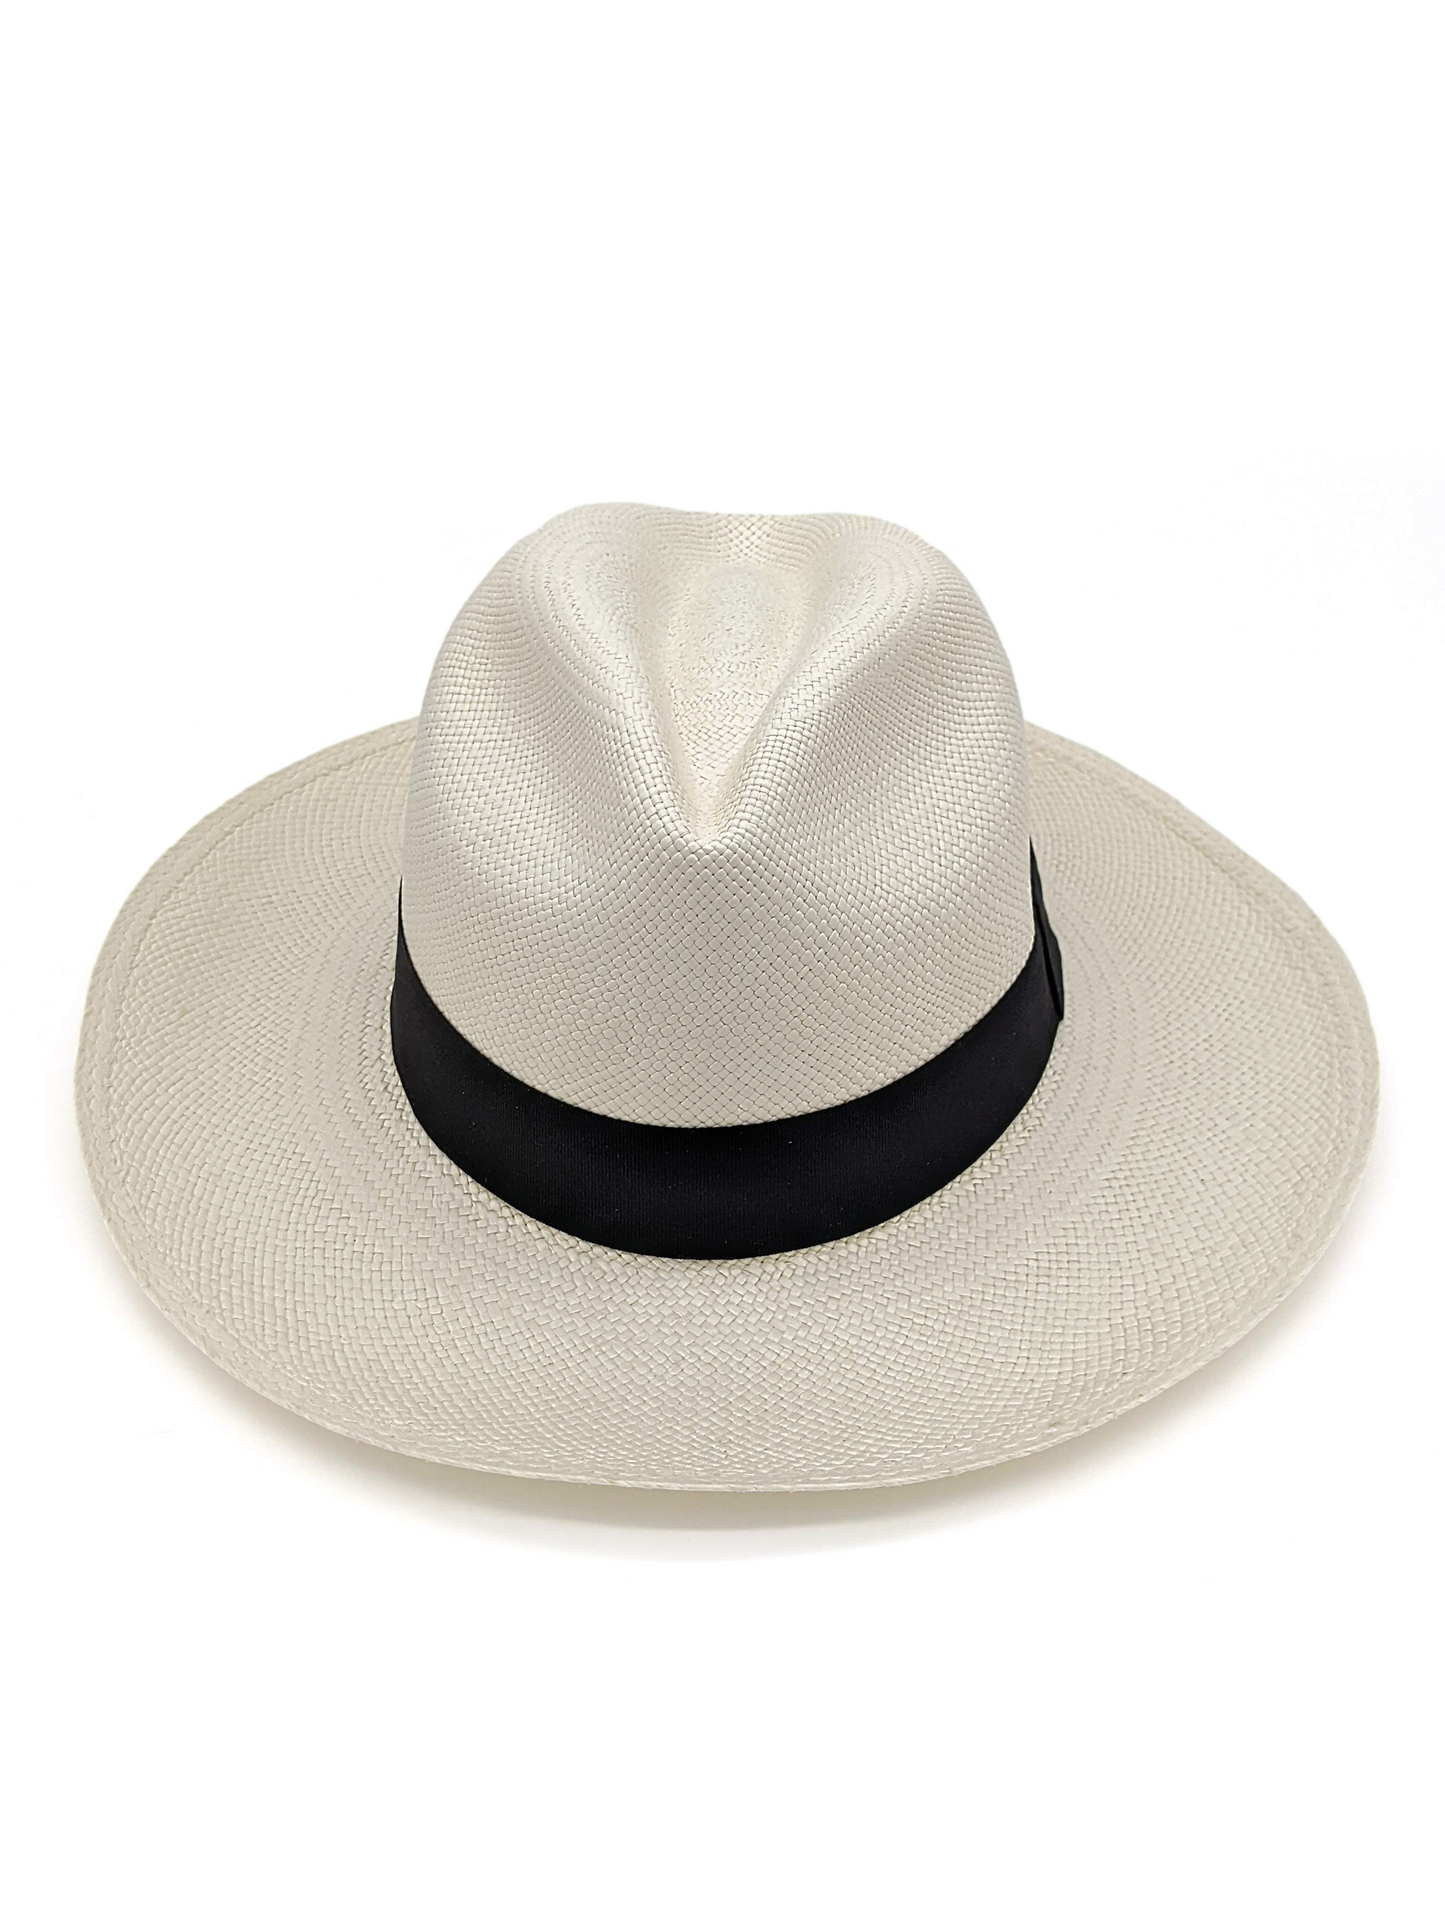 White Panama Hat + Travel Tube